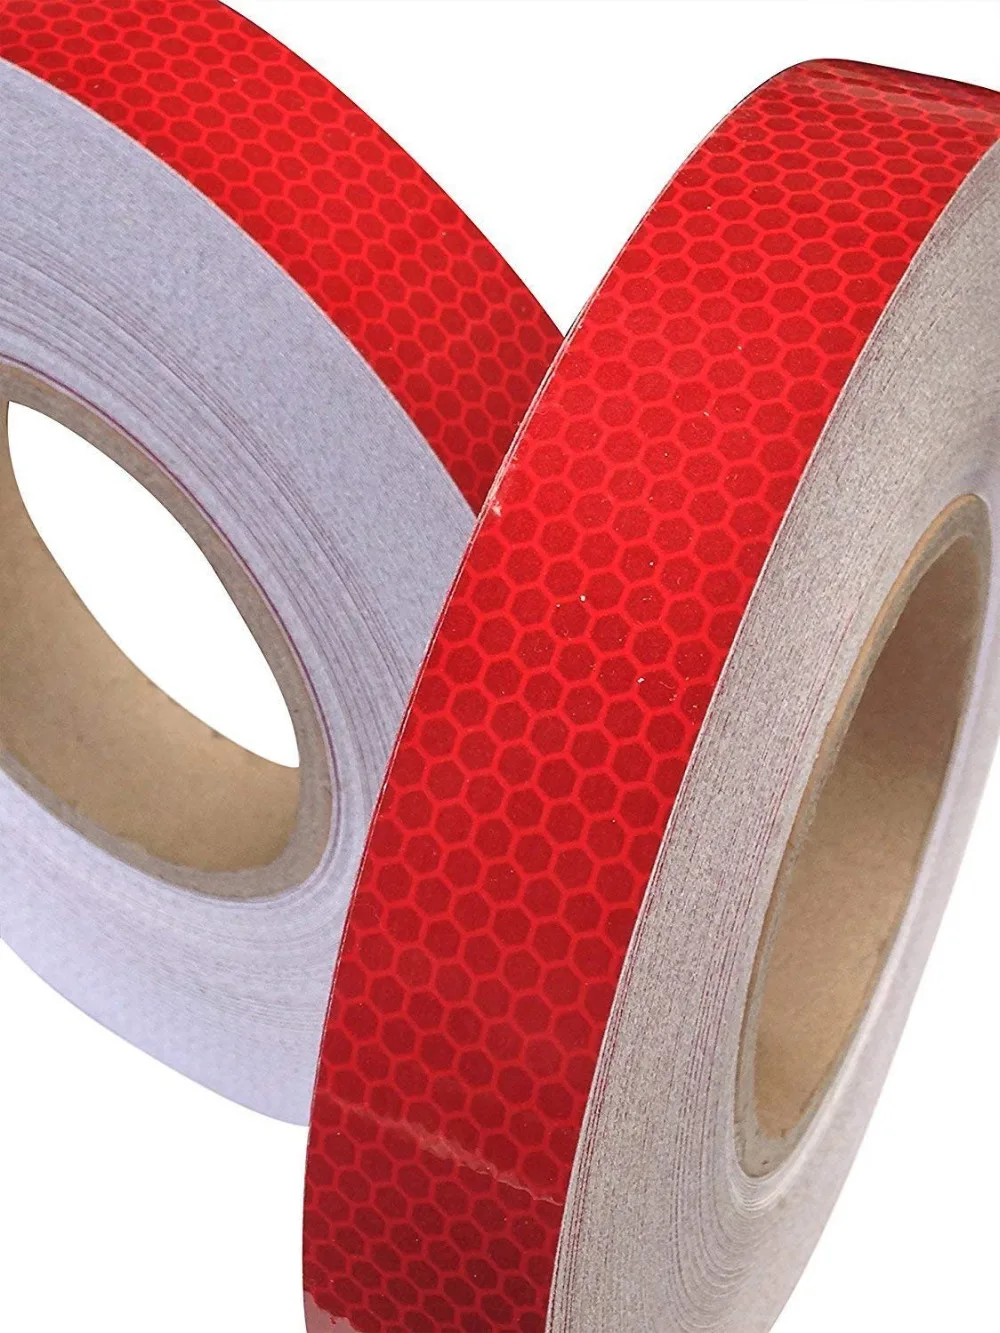 Red & White Arrow High Intensity Reflective Tape Self-Adhesive Waterproof UK 